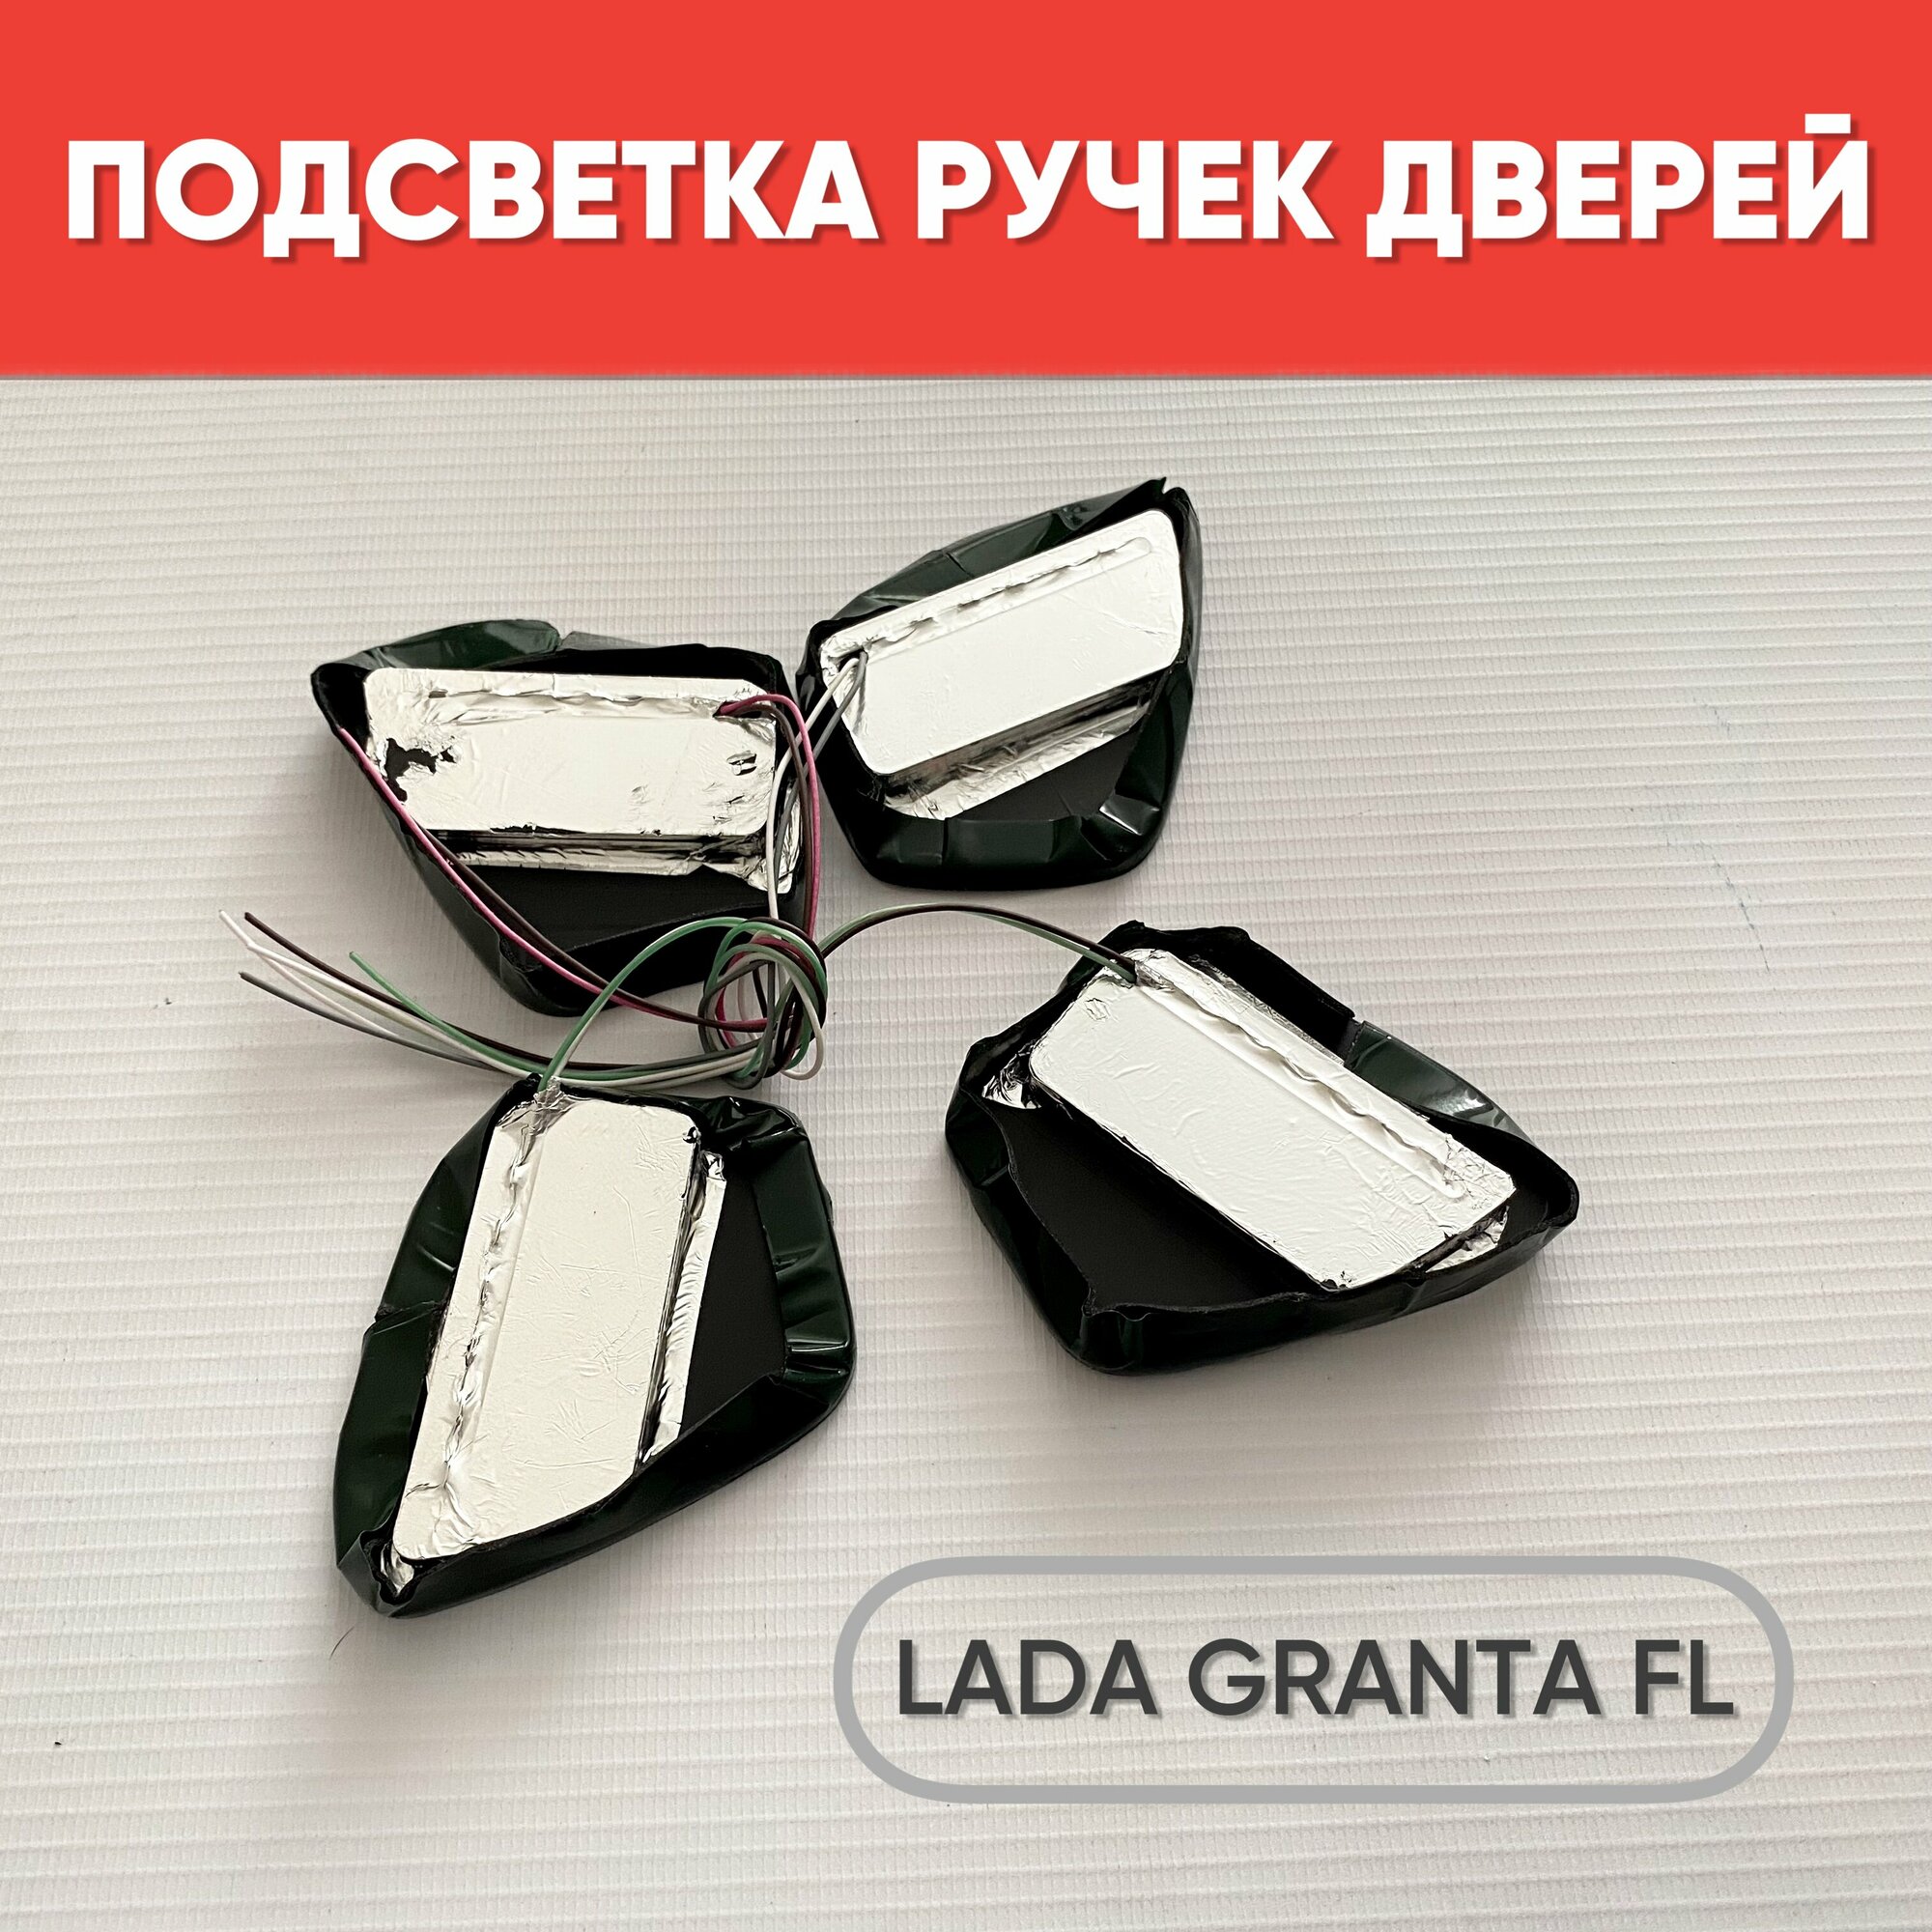 Подсветка внутренних ручек дверей на Lada Granta FL белый свет 4 шт. / Подсветка ручек салона Лада Гранта FL